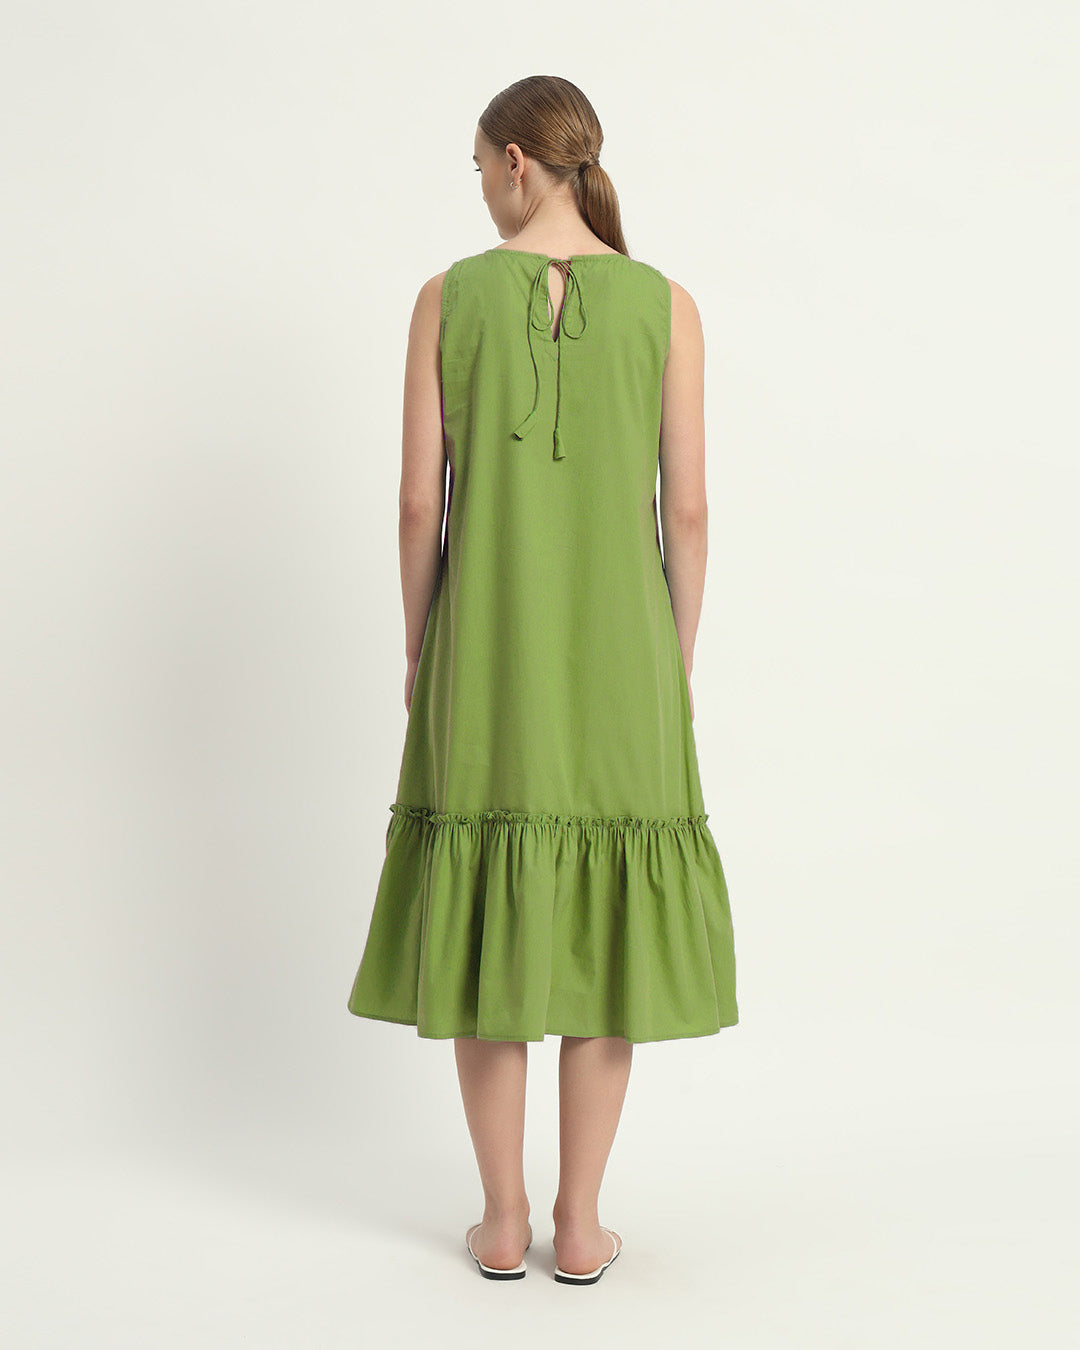 The Fern Millis Cotton Dress